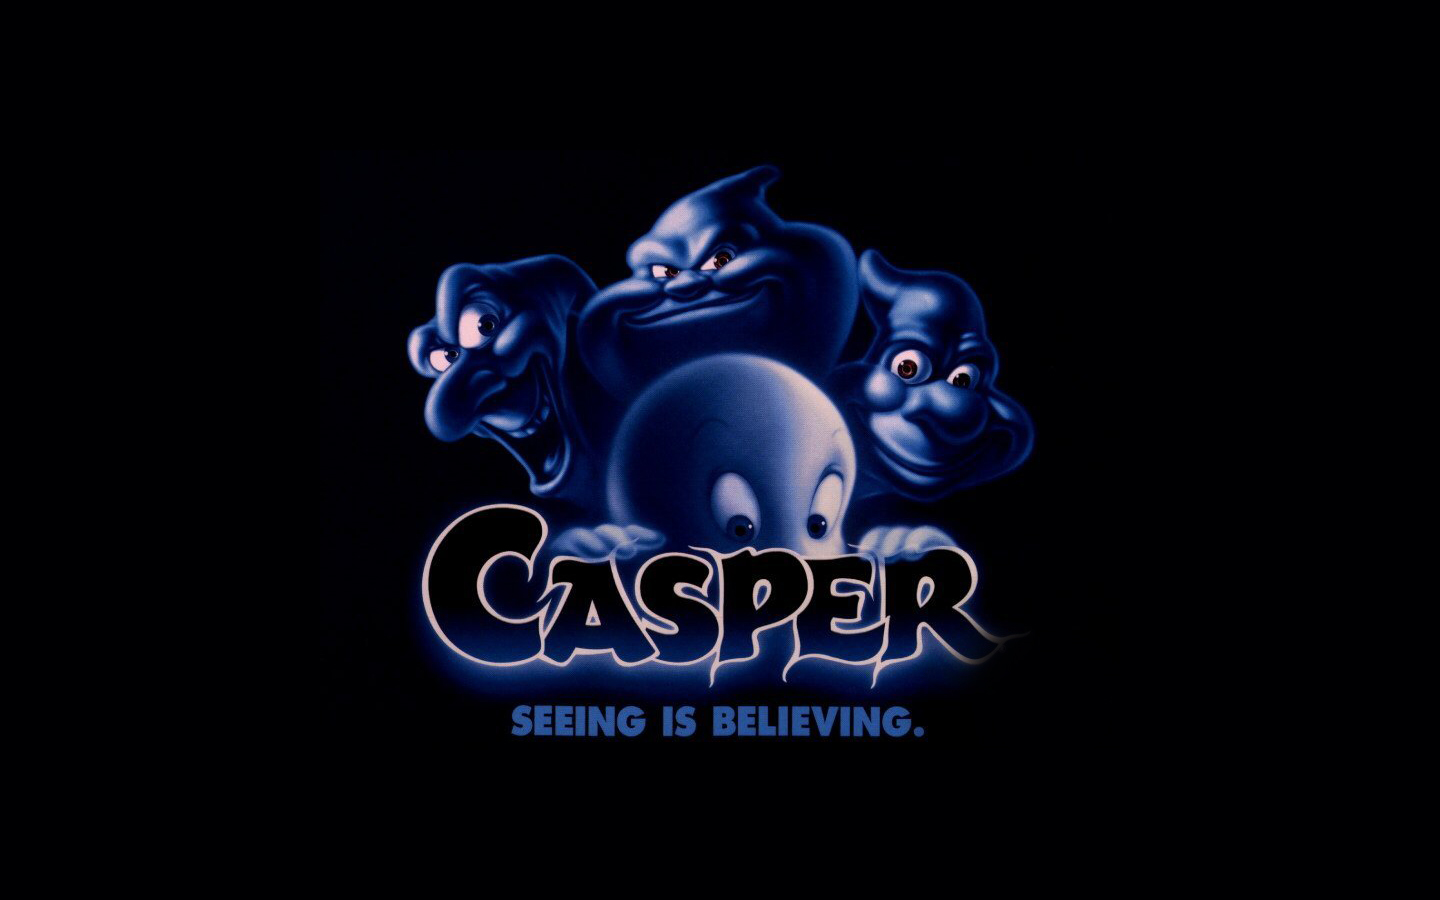 Casper Seeing